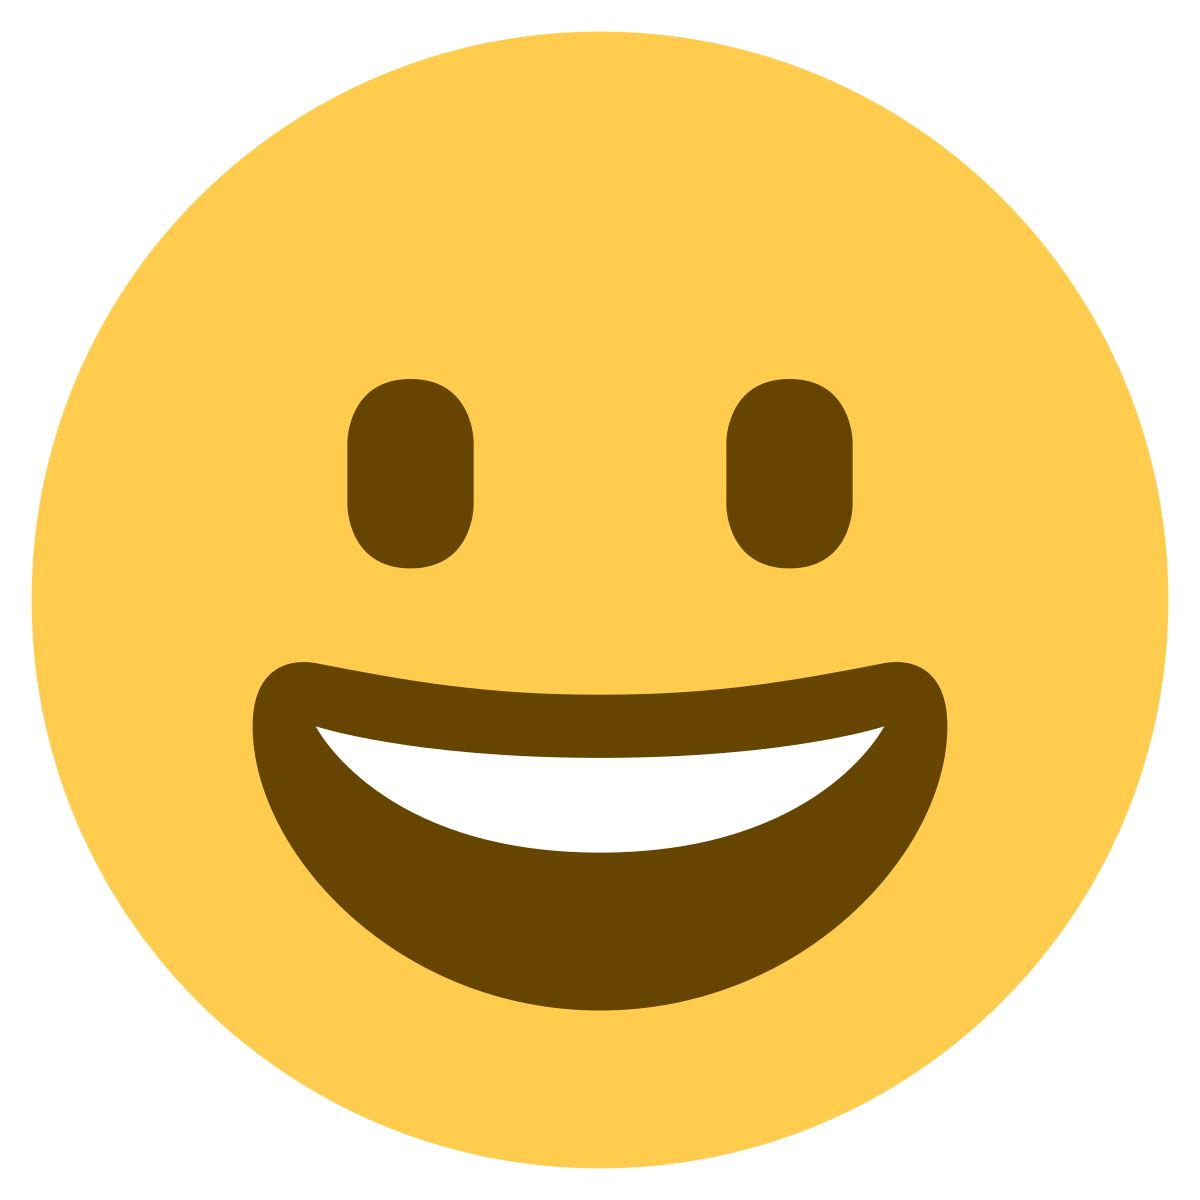 Smiling emoji without words